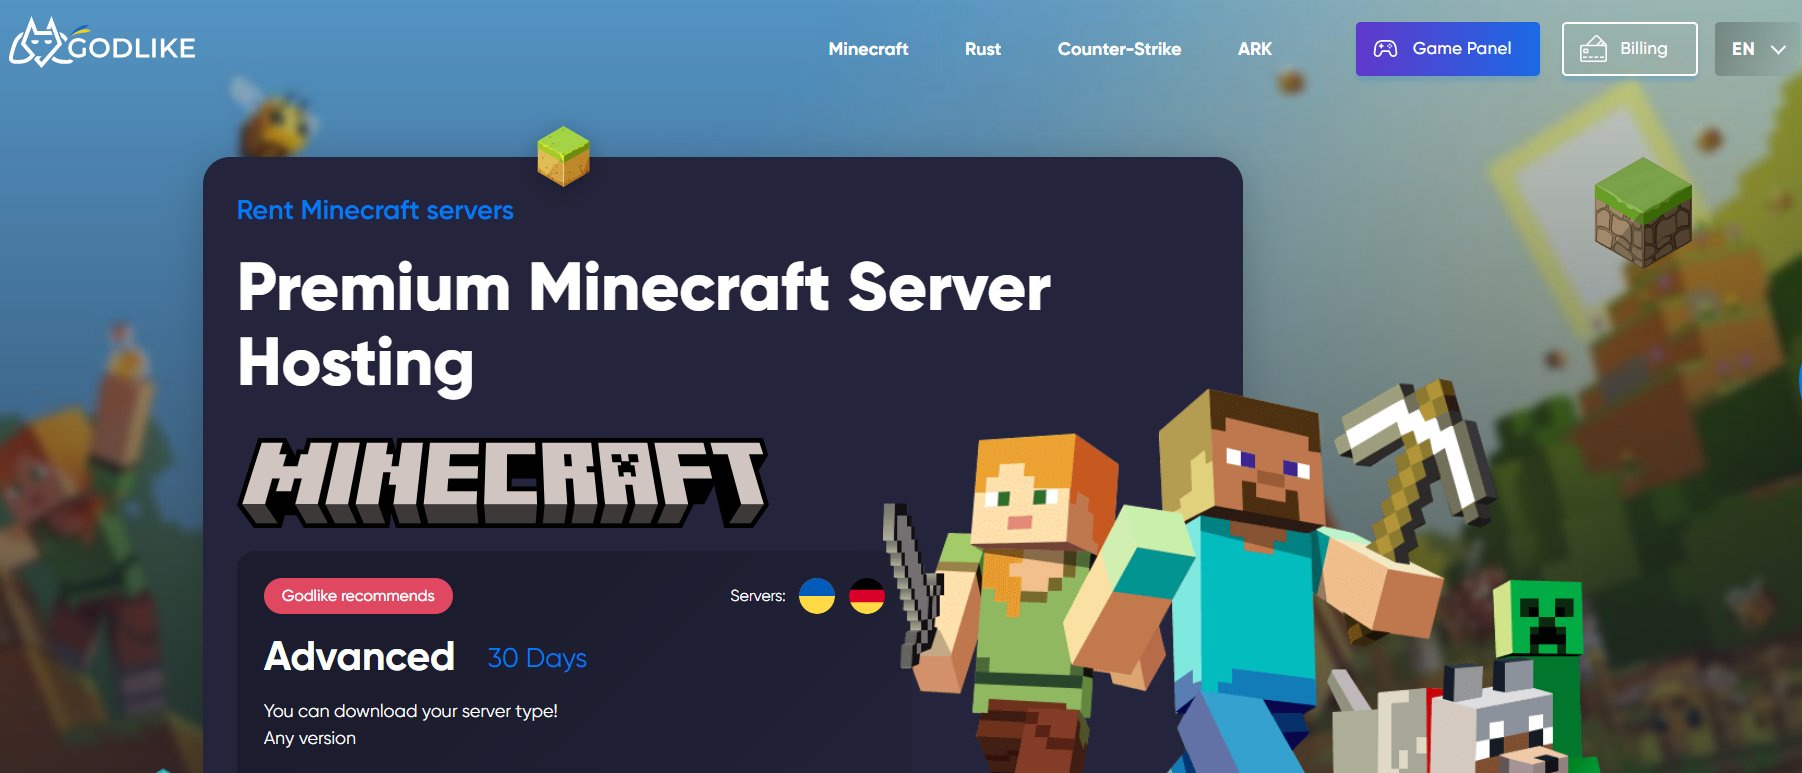 Minecraft Server Hosting, Game Server Host